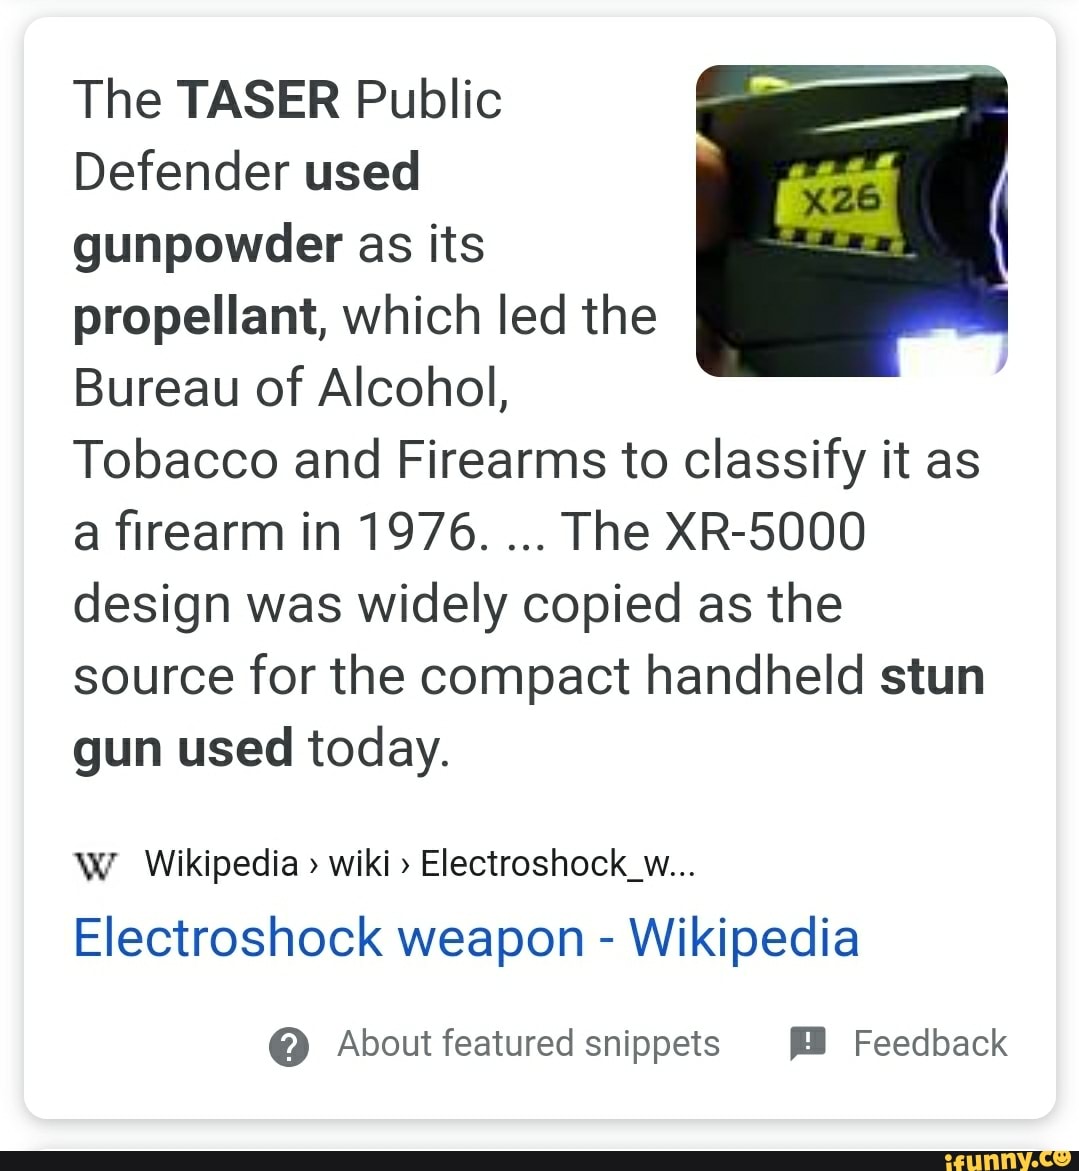 Electroshock weapon - Wikipedia